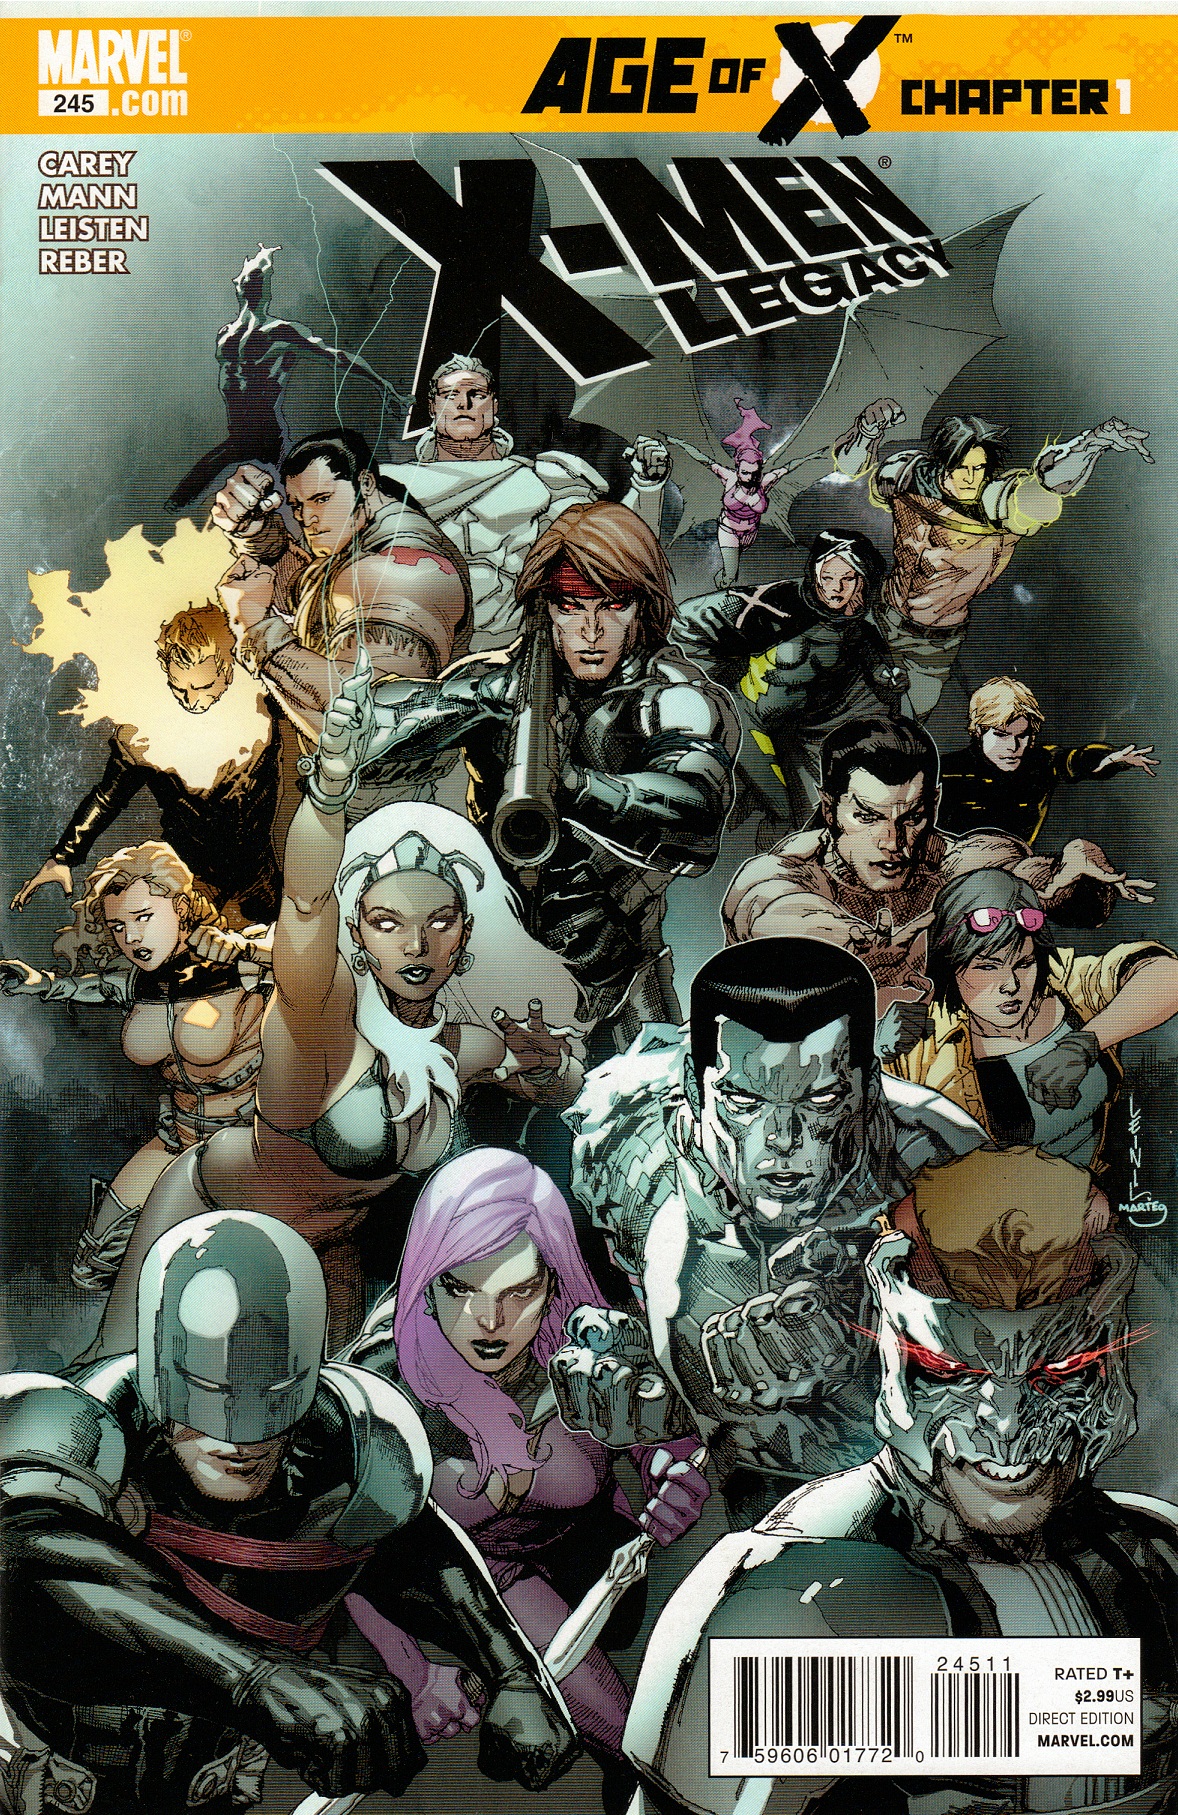 X-Men: Legacy HD wallpapers, Desktop wallpaper - most viewed